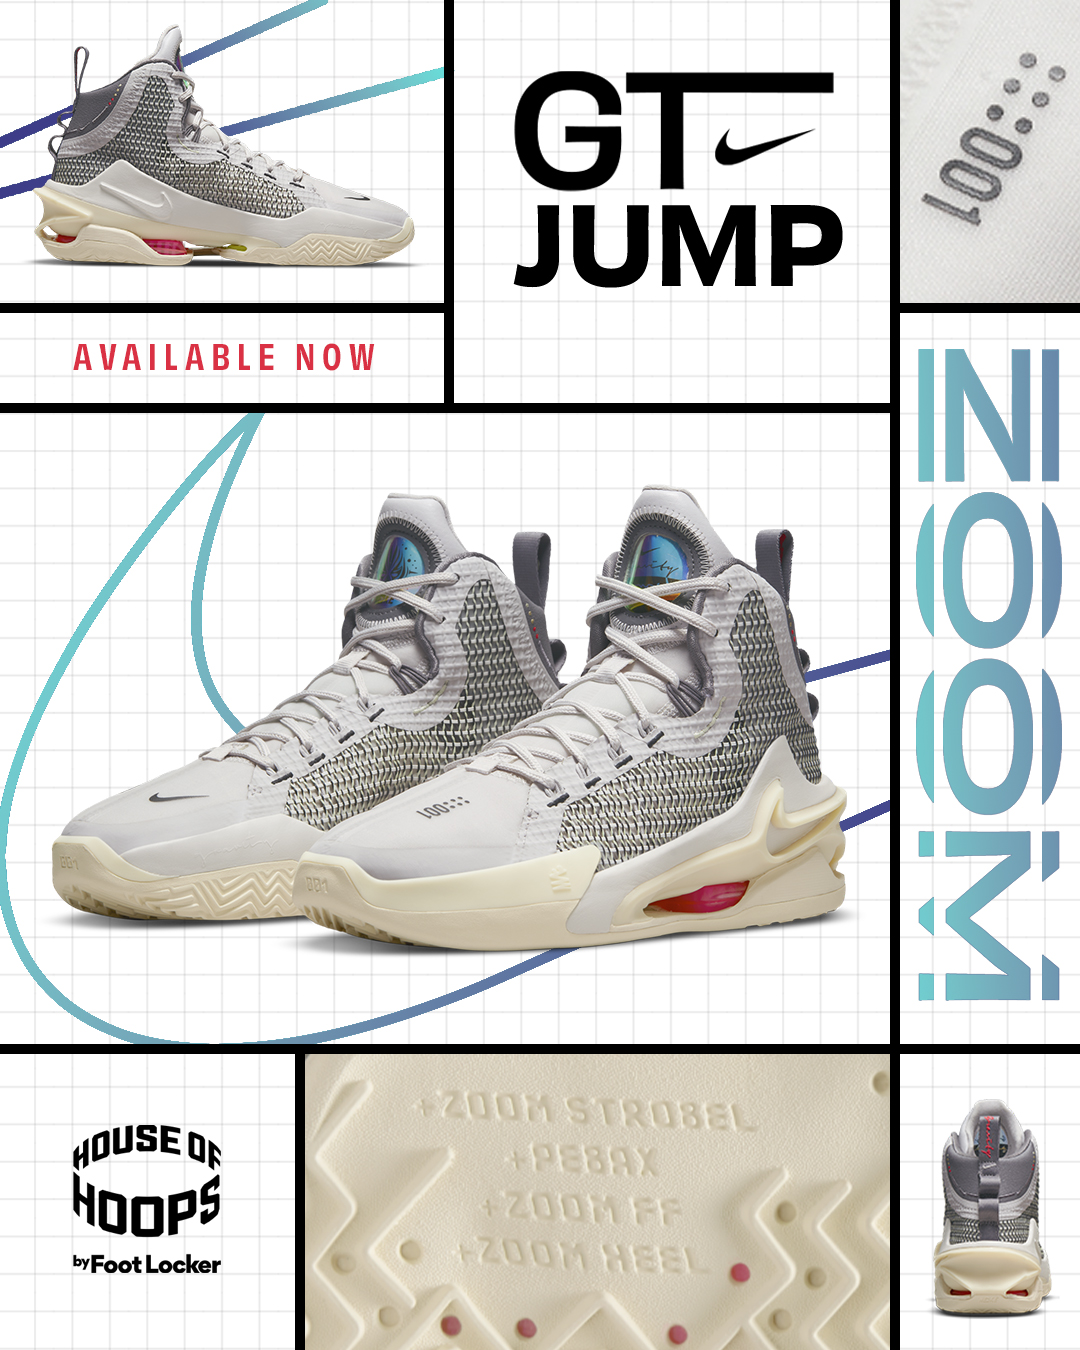 Nike-Zoom-GT-Jump-4×5-web